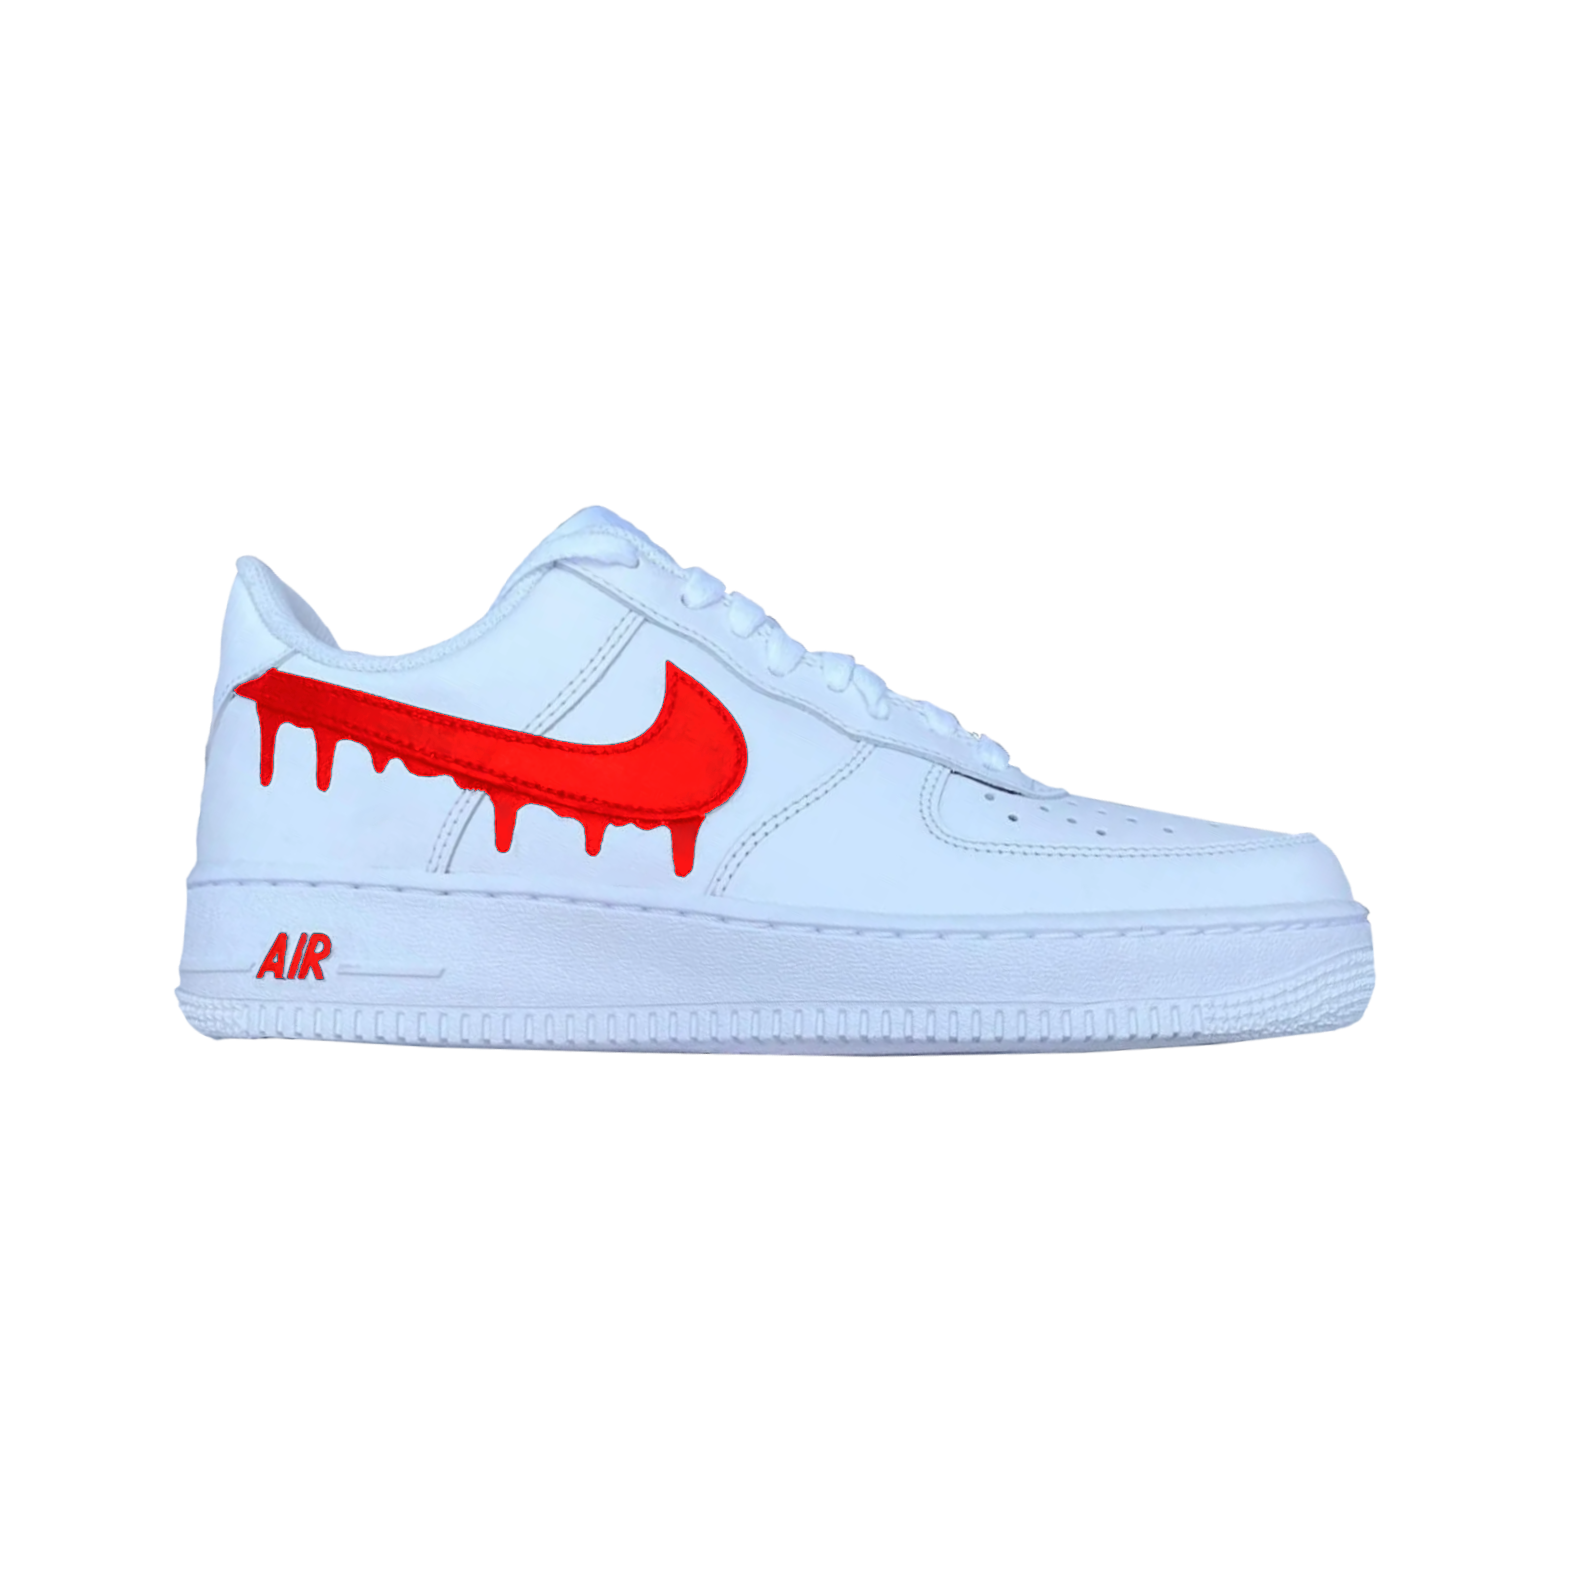 Custom Nike Air Force 1 Shoes red drip